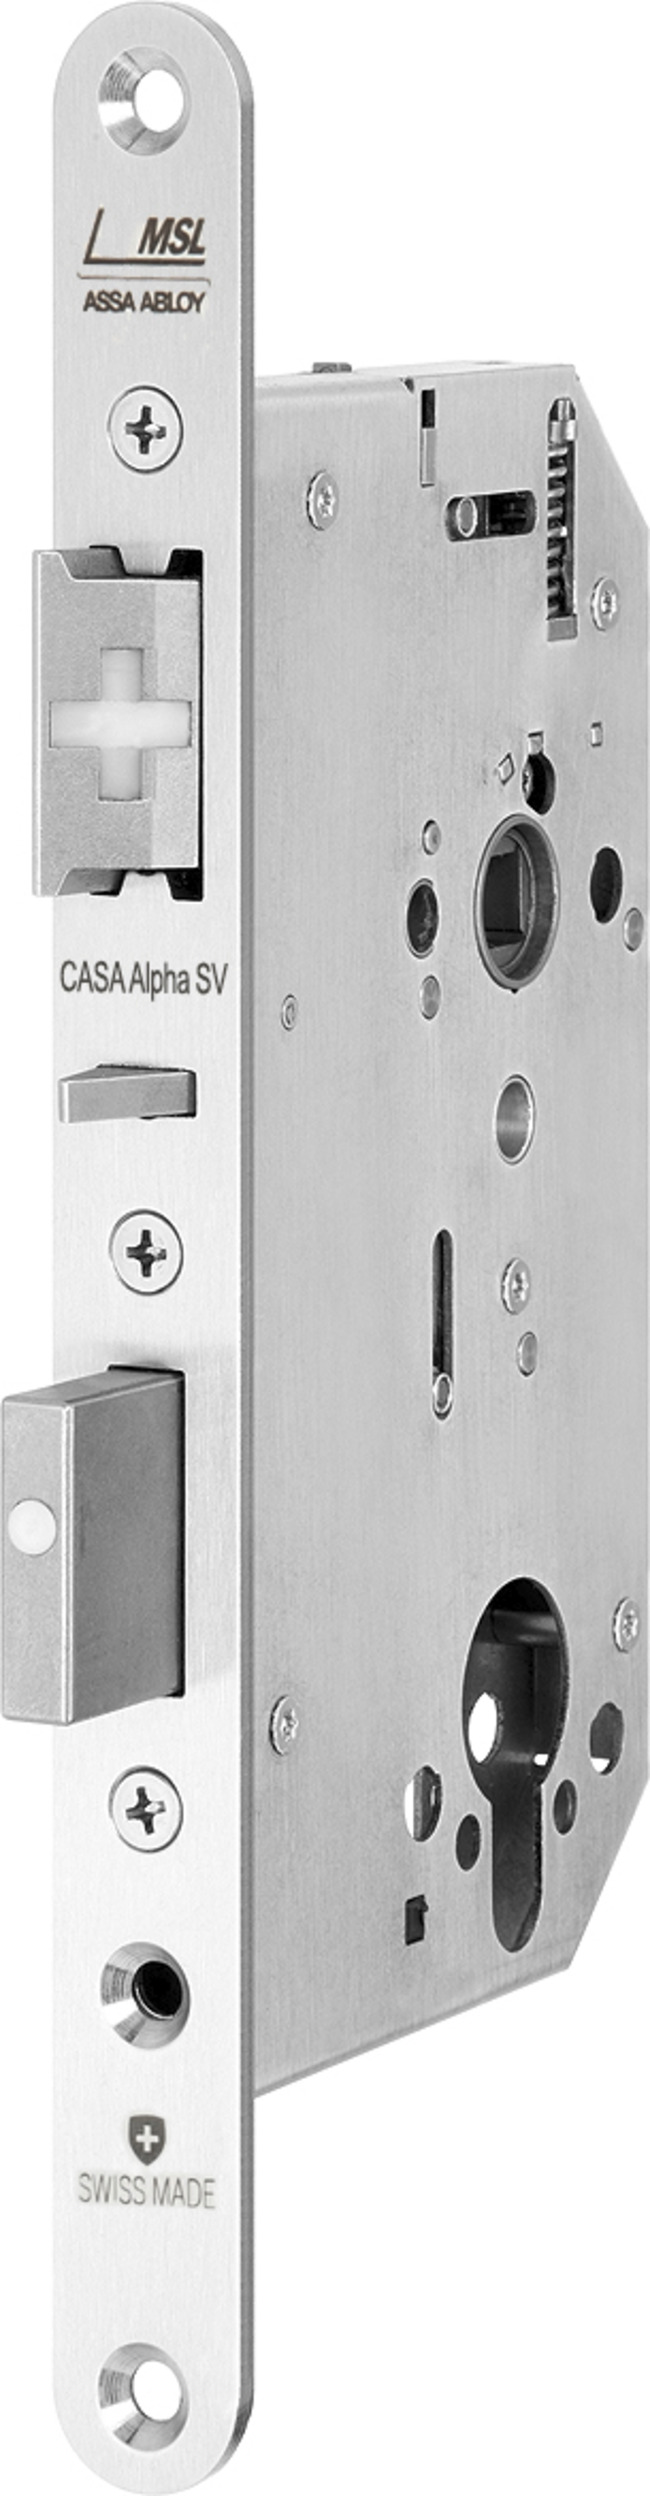 Panic safety single-point locking (solid leaf doors) 40101PBa-SV